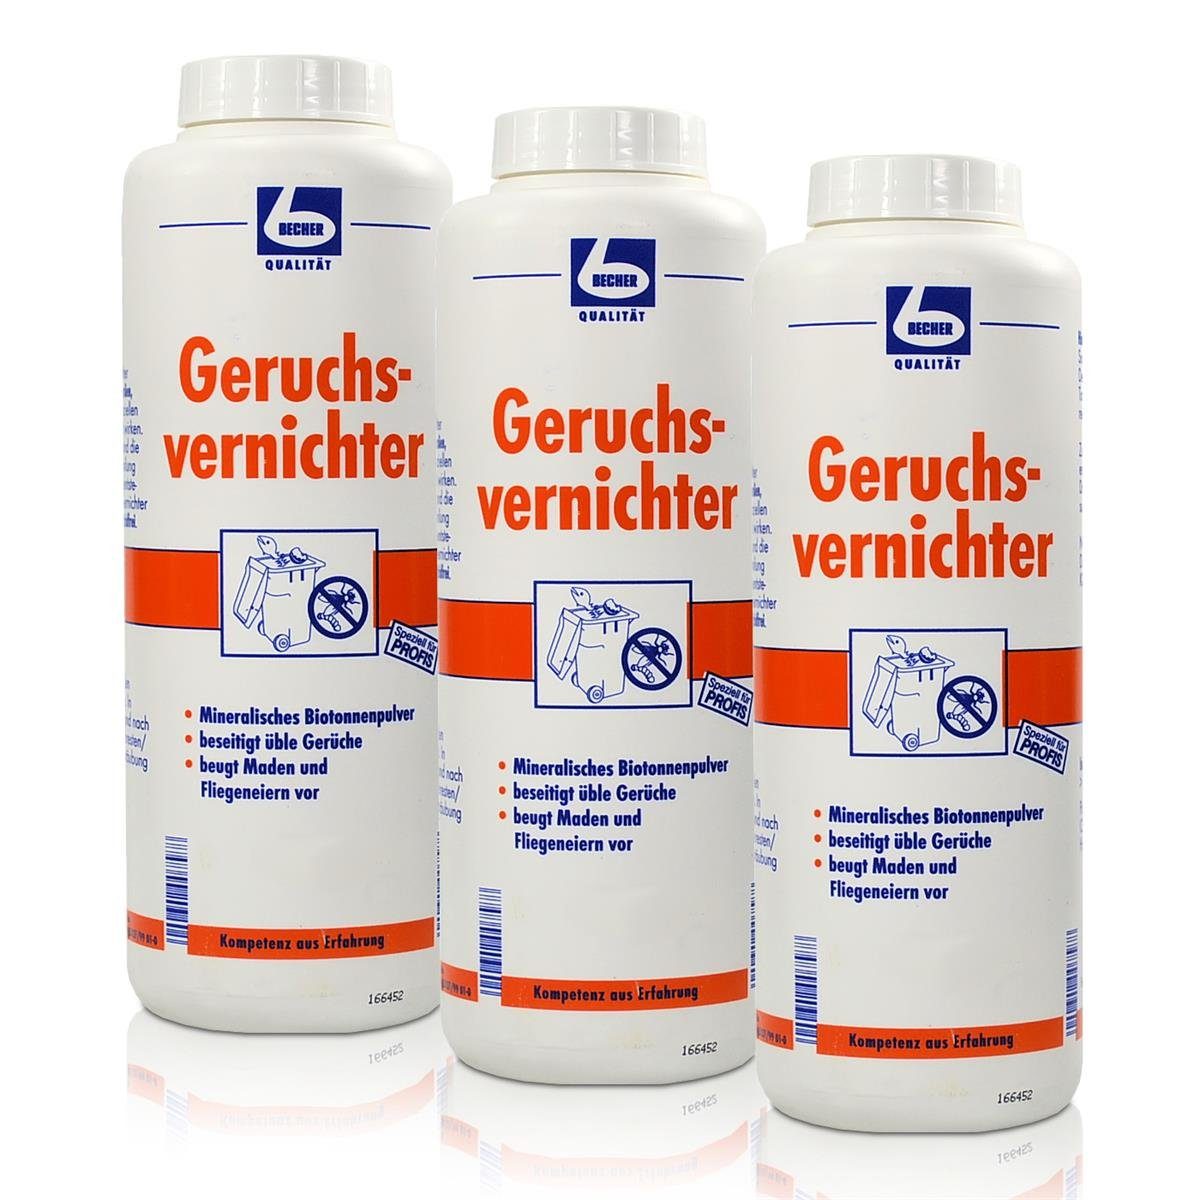 g 750 beseitigtle Gerüche - Dr. Geruchsvernichter Dr. Becher Spezialwaschmittel 3x Becher